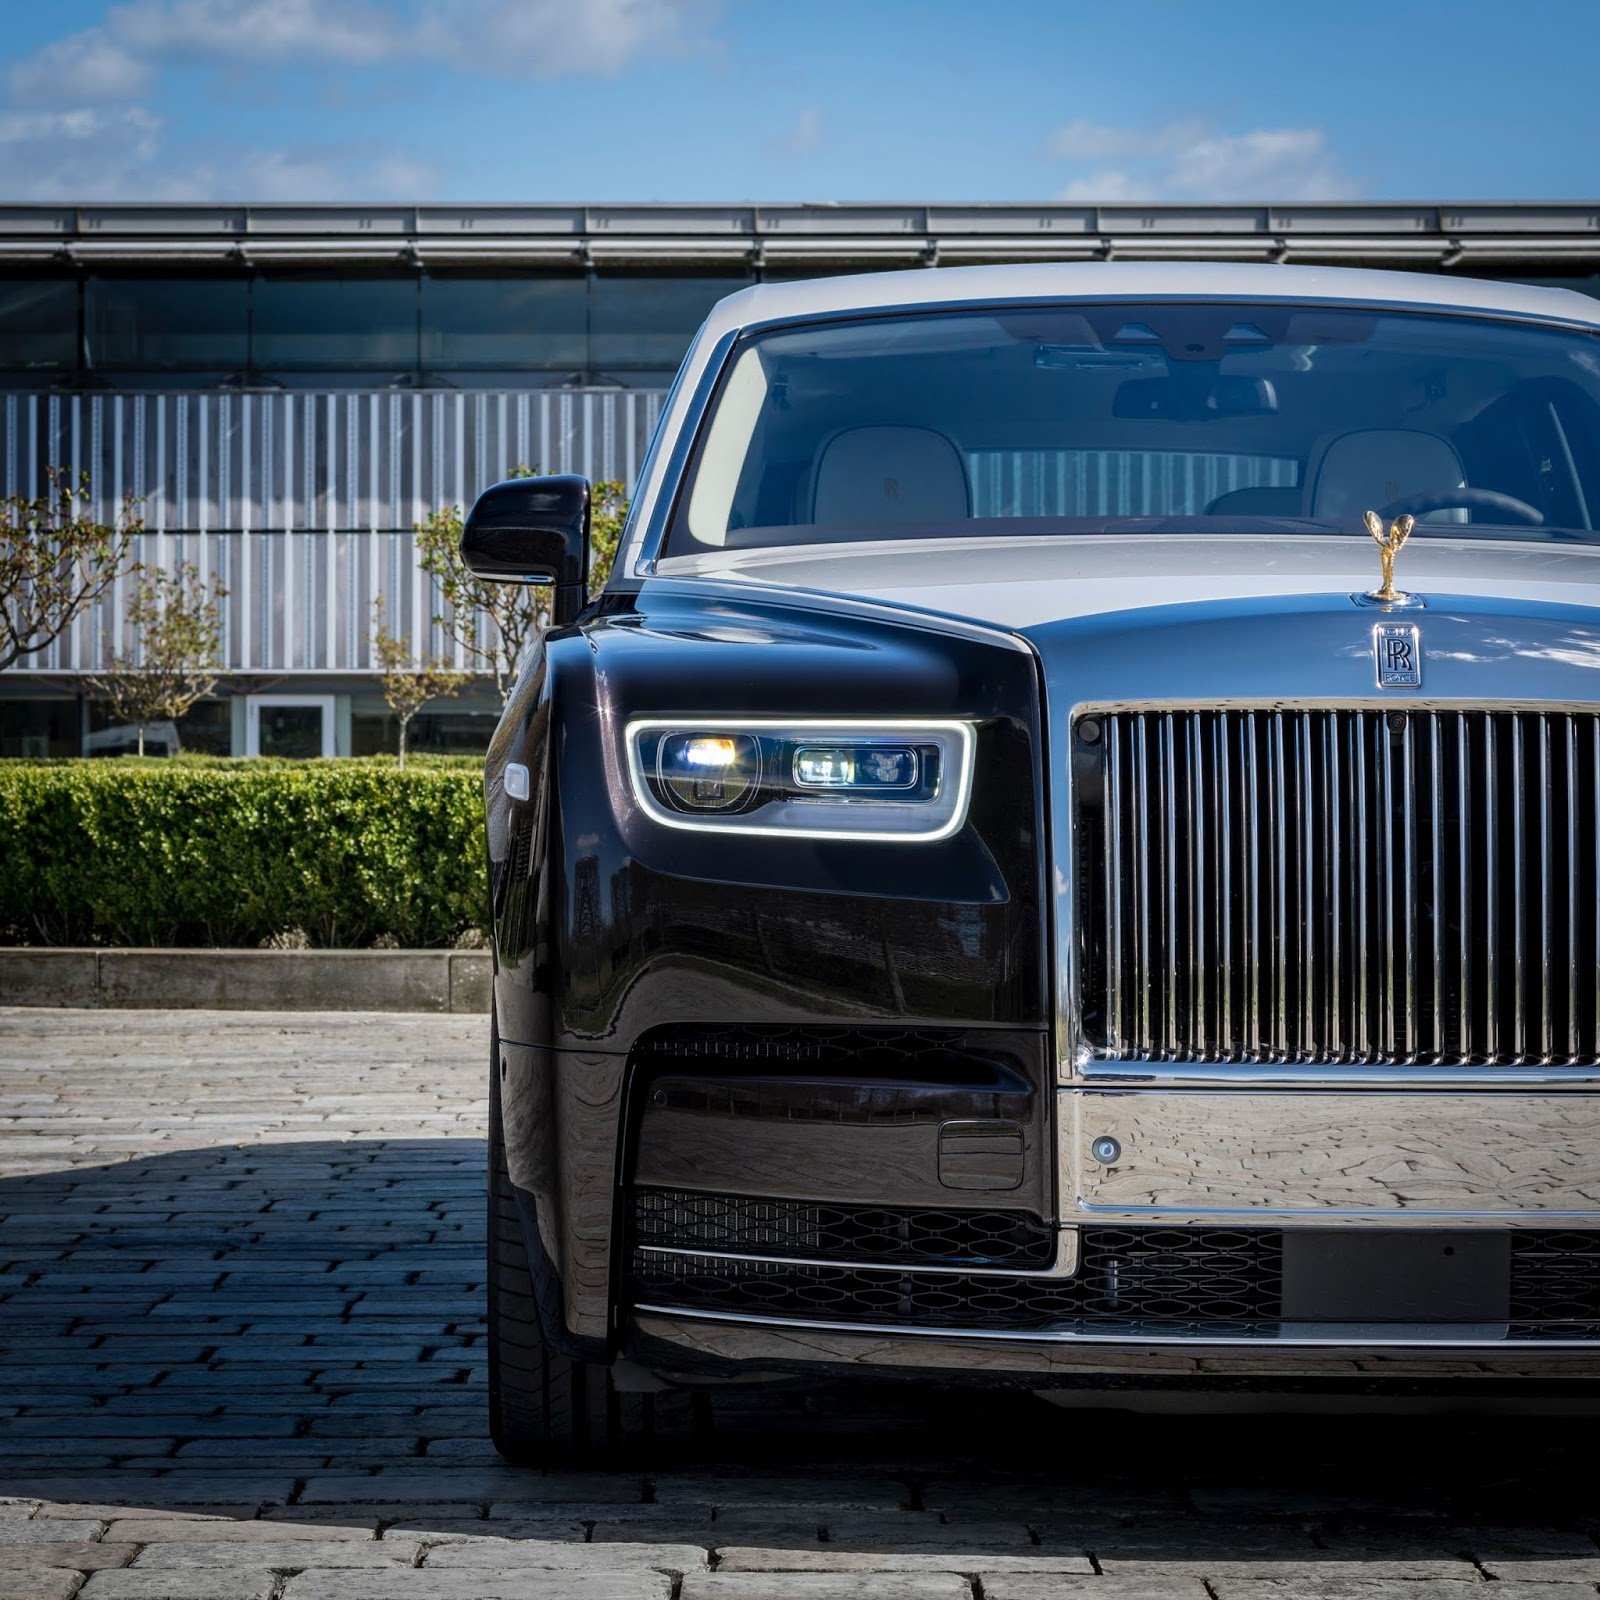 Автомобиль роллс ройс. Роллс Ройс Фантом. Машина Rolls Royce Phantom. Роллс Ройс Фантом 2019. Роллс Ройс Фантом 6.